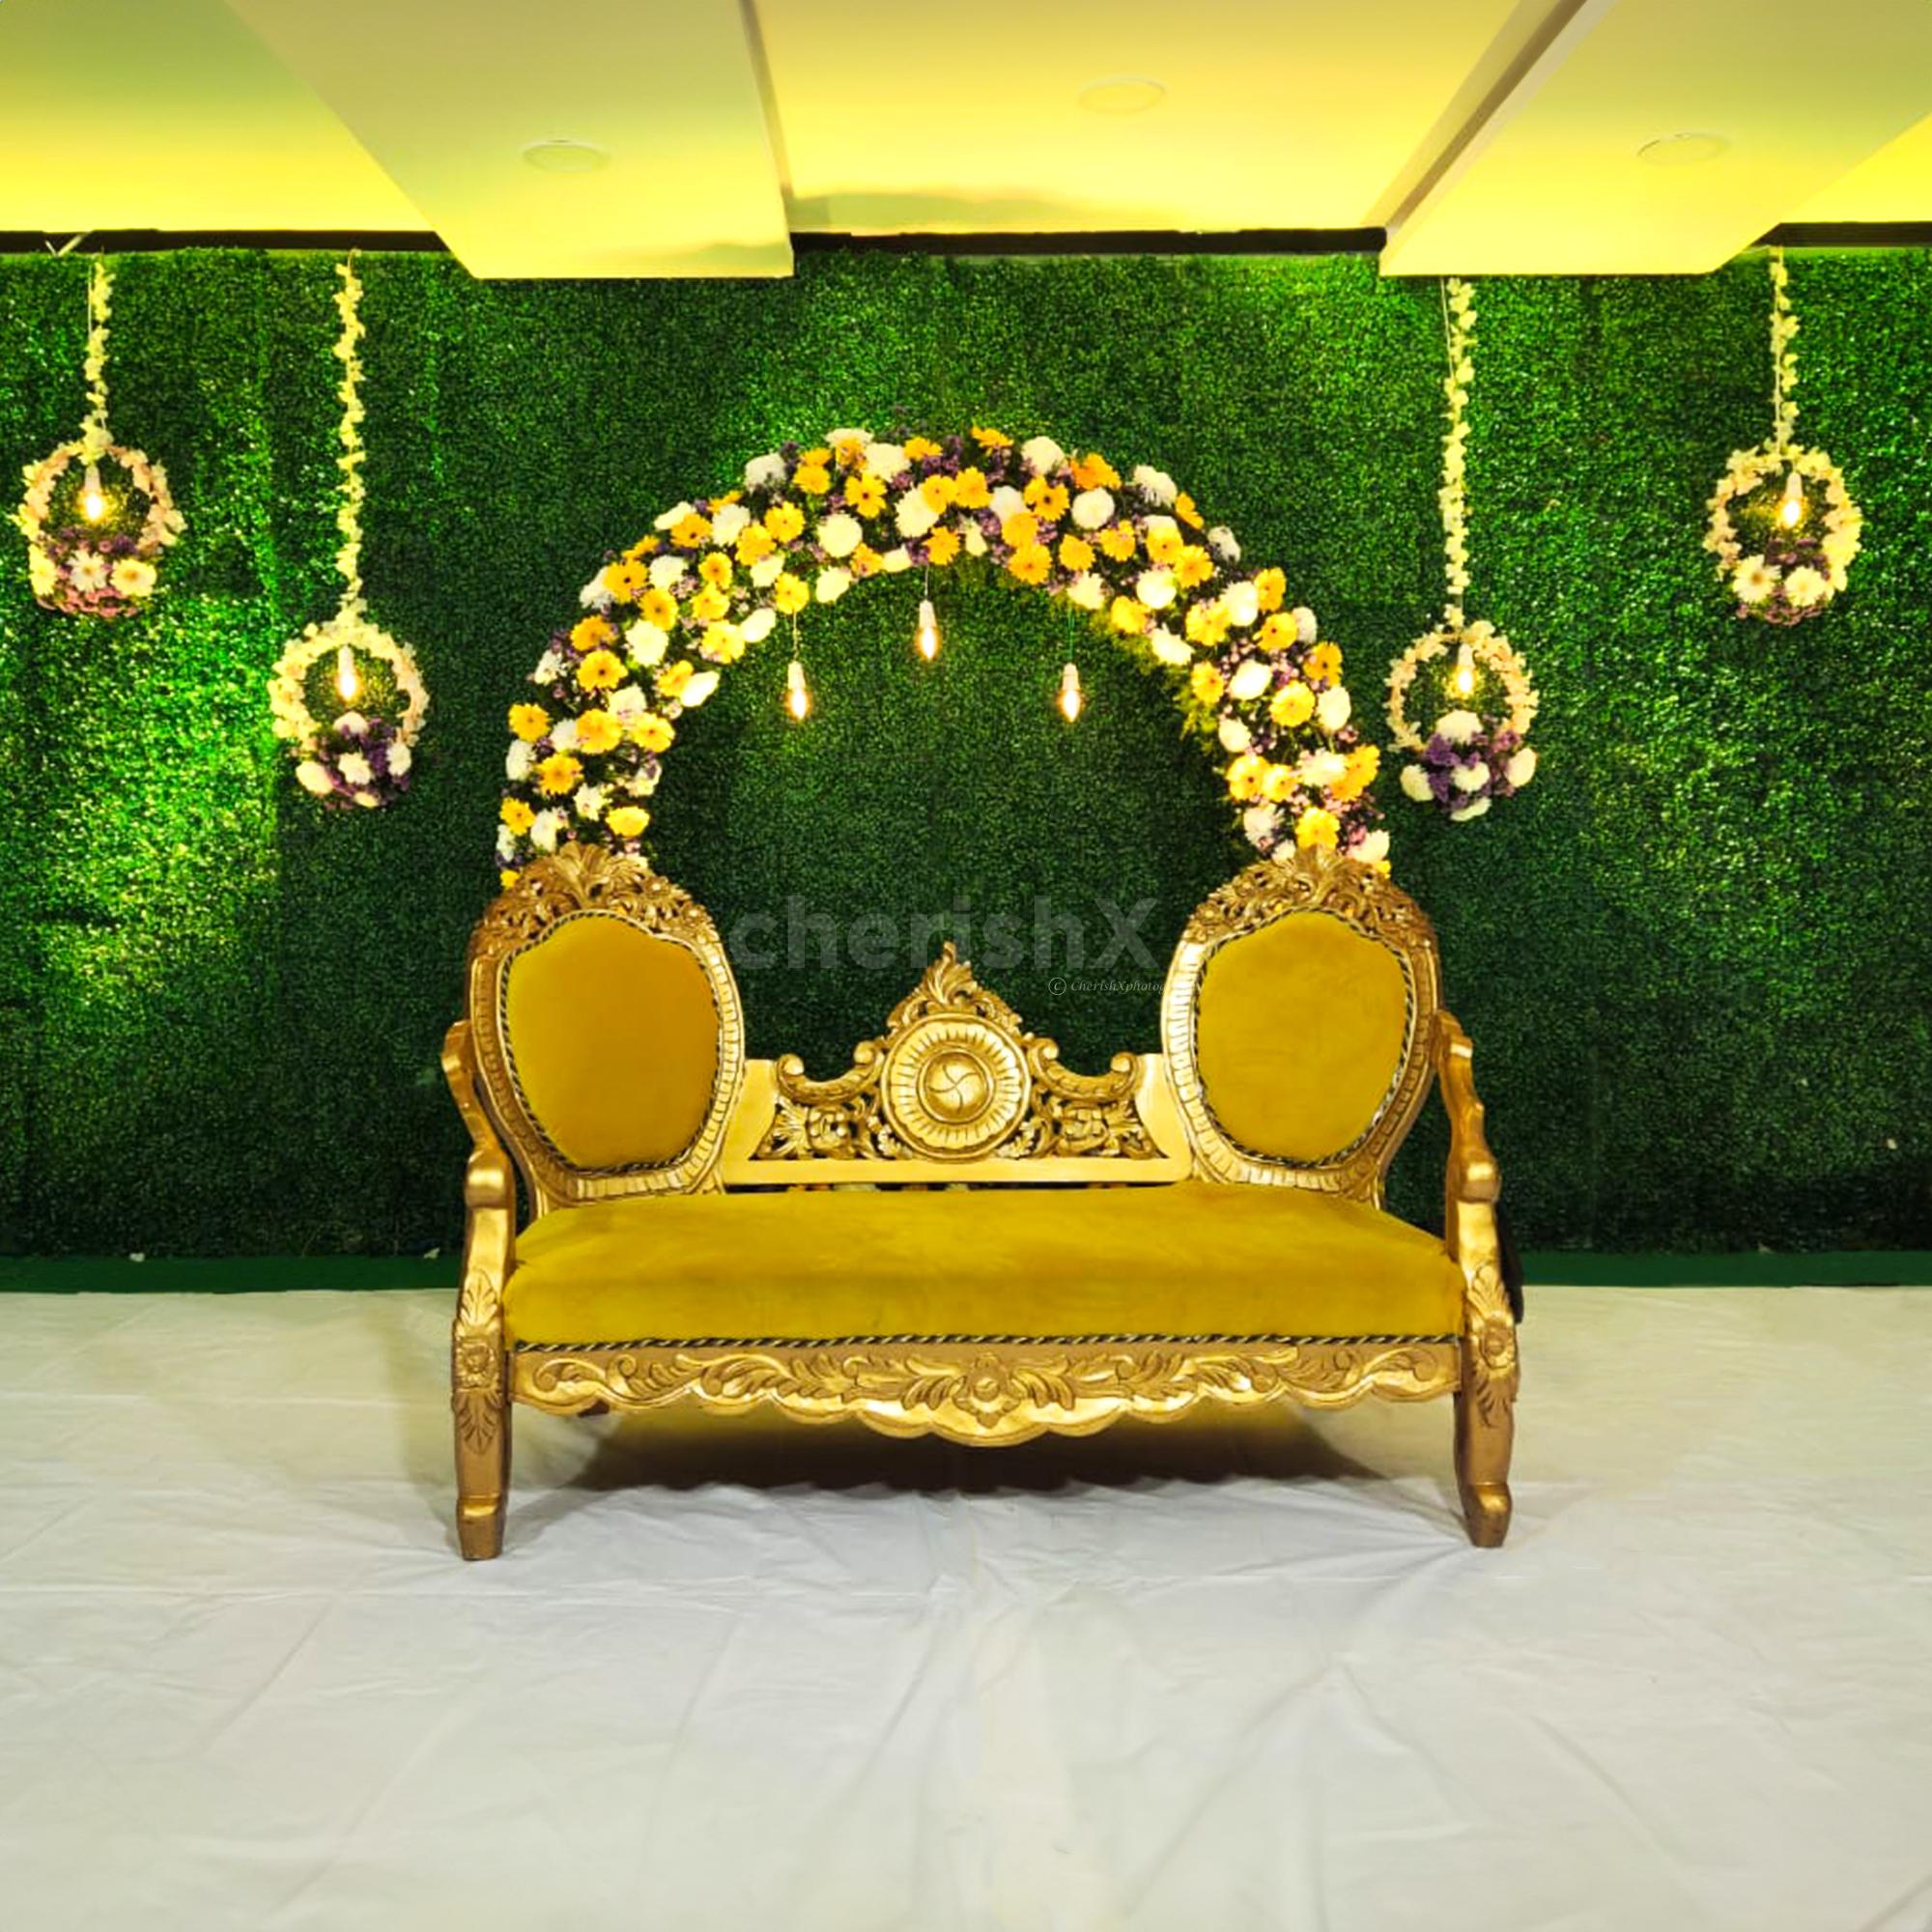 Photos and video of Banquet hall Garden Palace from Kolkata